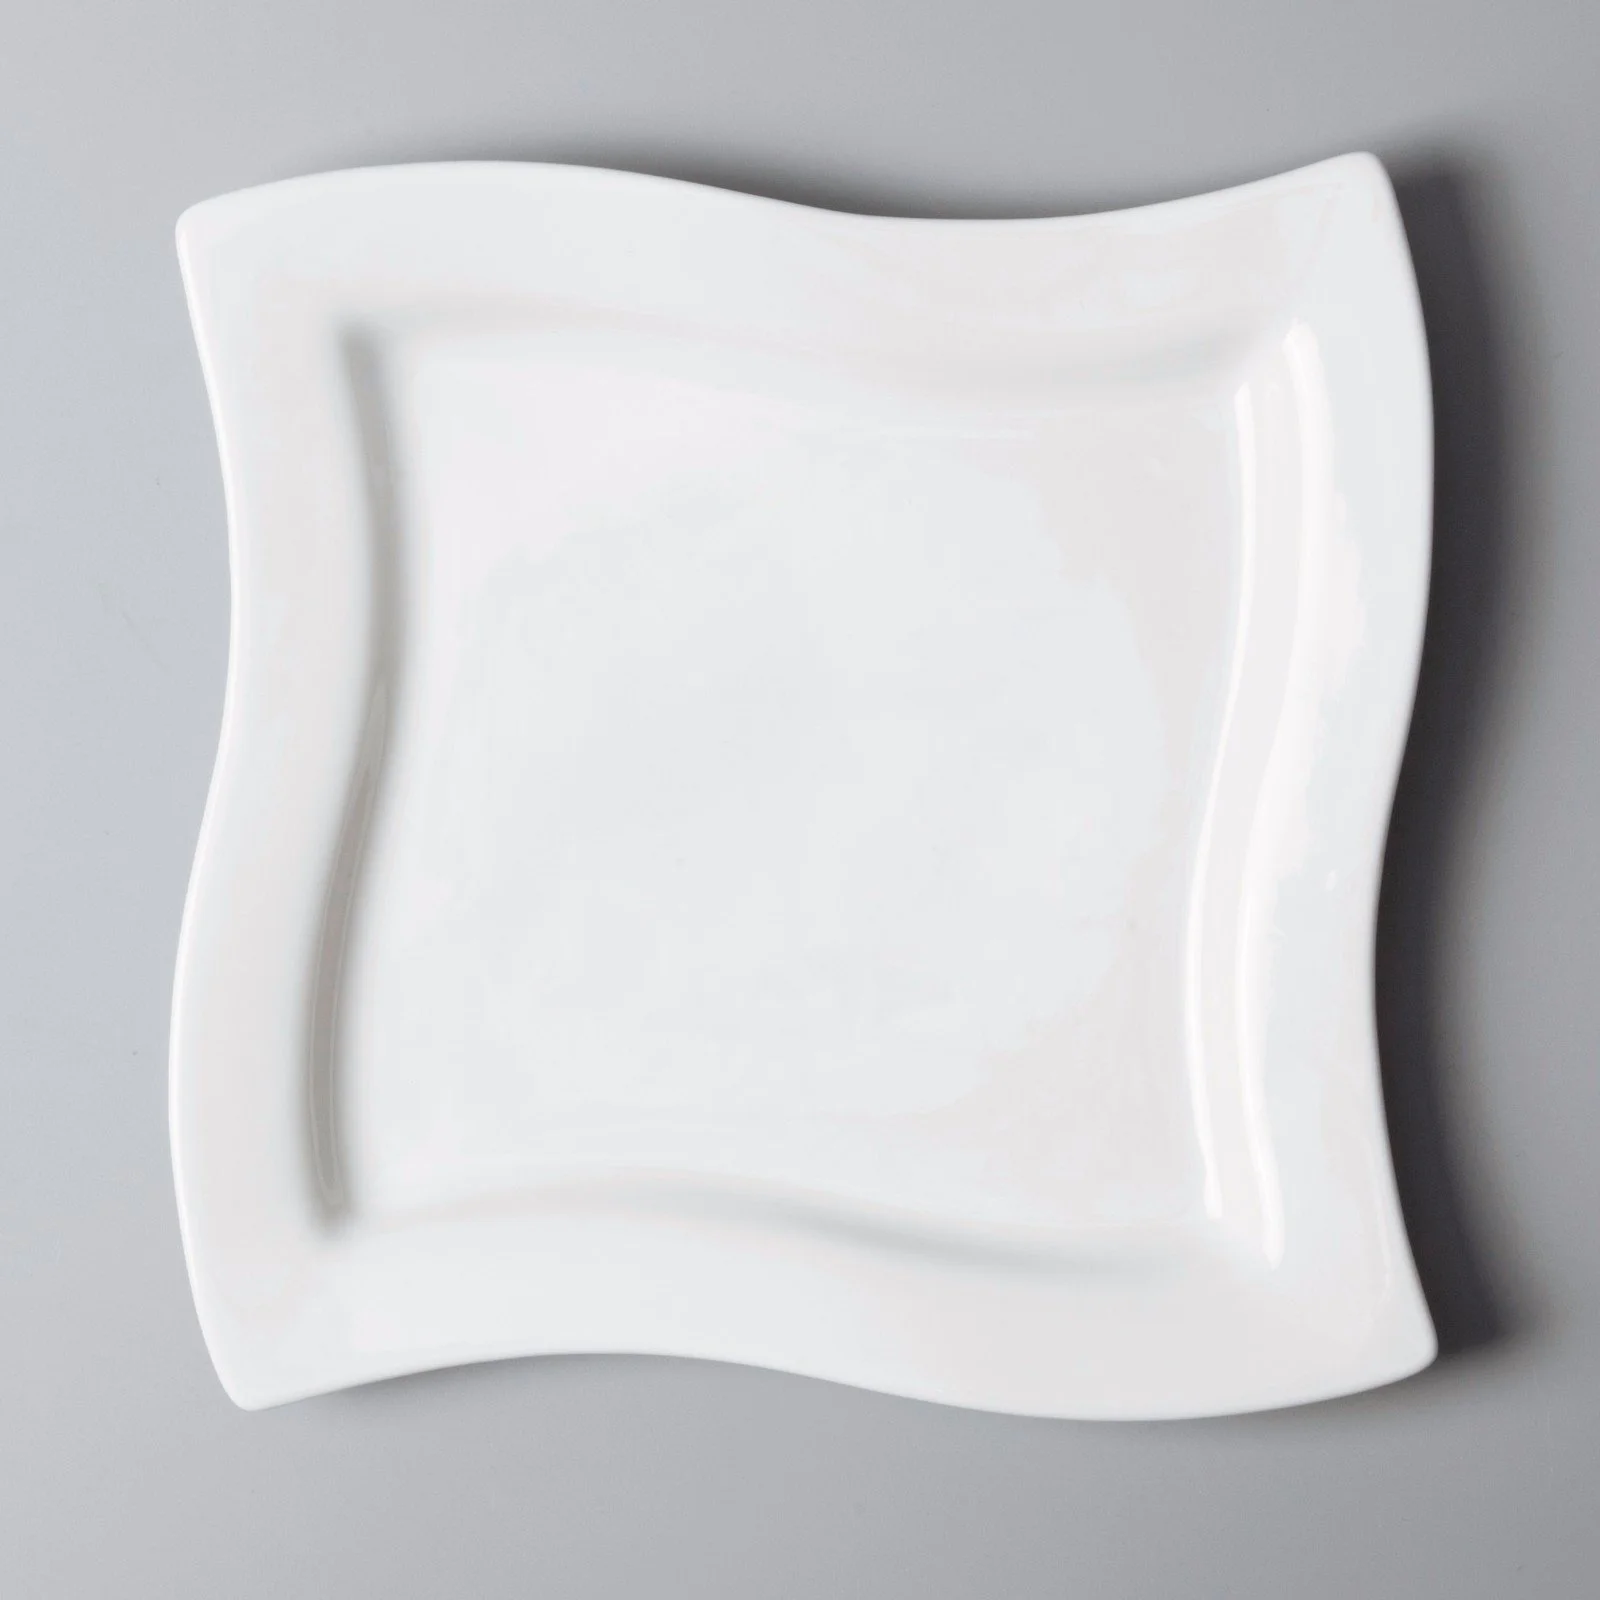 white porcelain tableware royalty two eight ceramics italian company